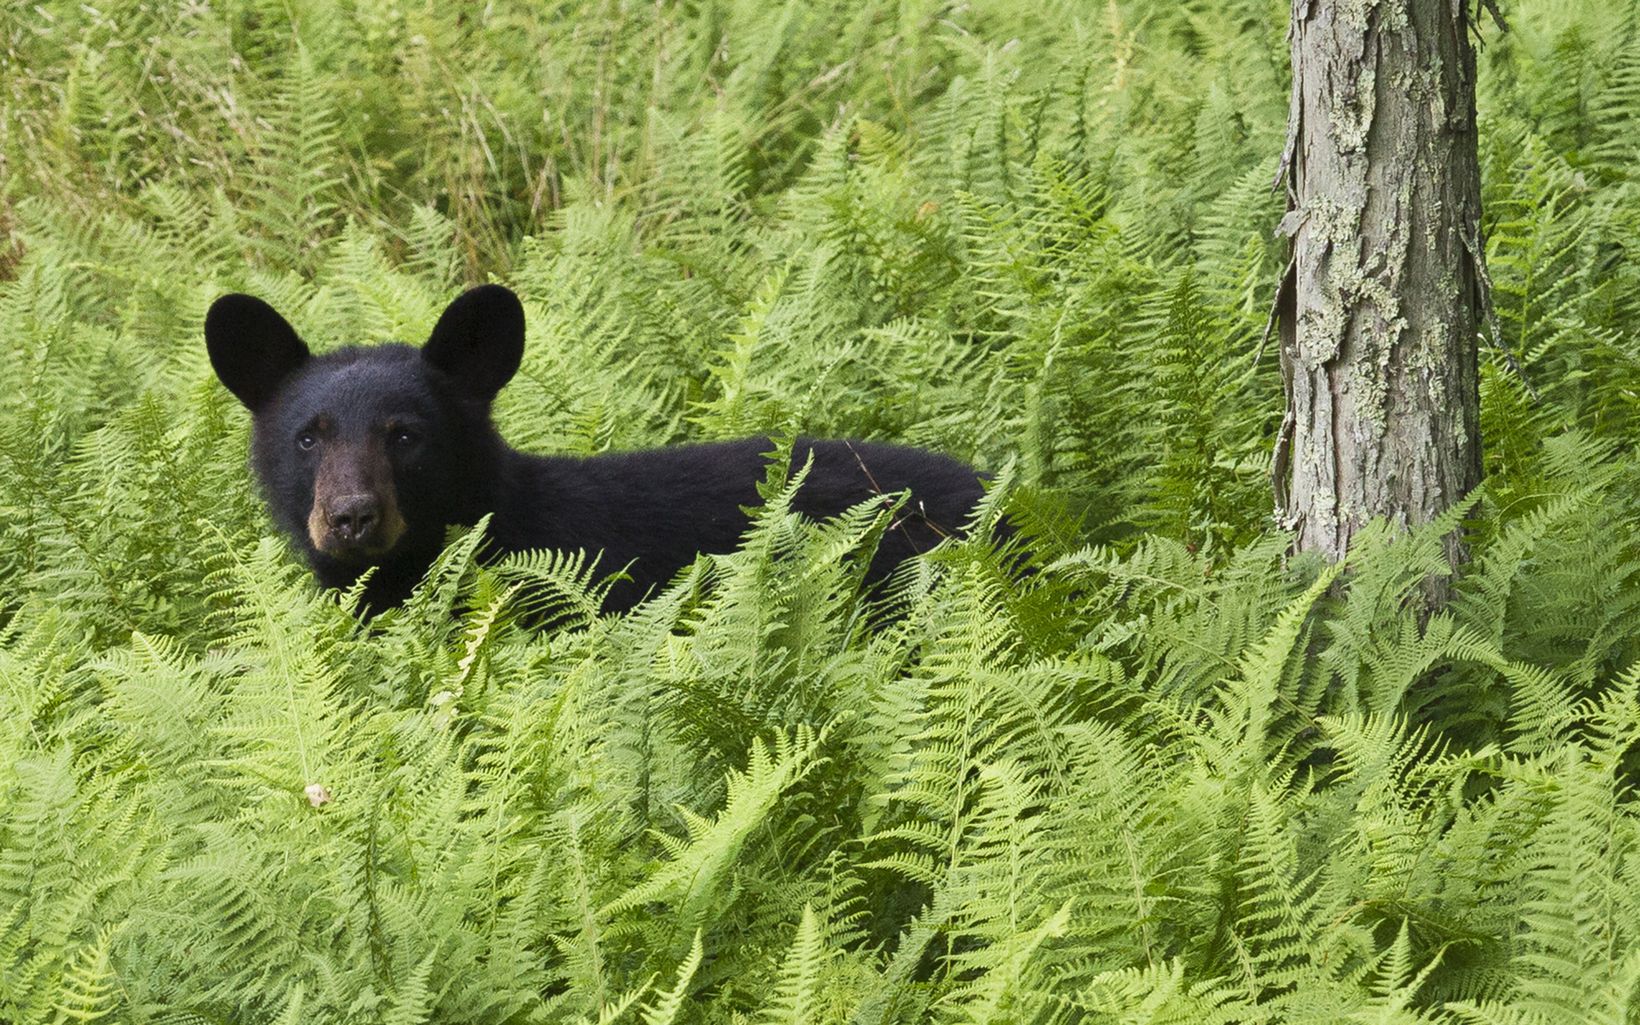 Bears Black bears can be found along the Greenbrier River. © Kent Mason